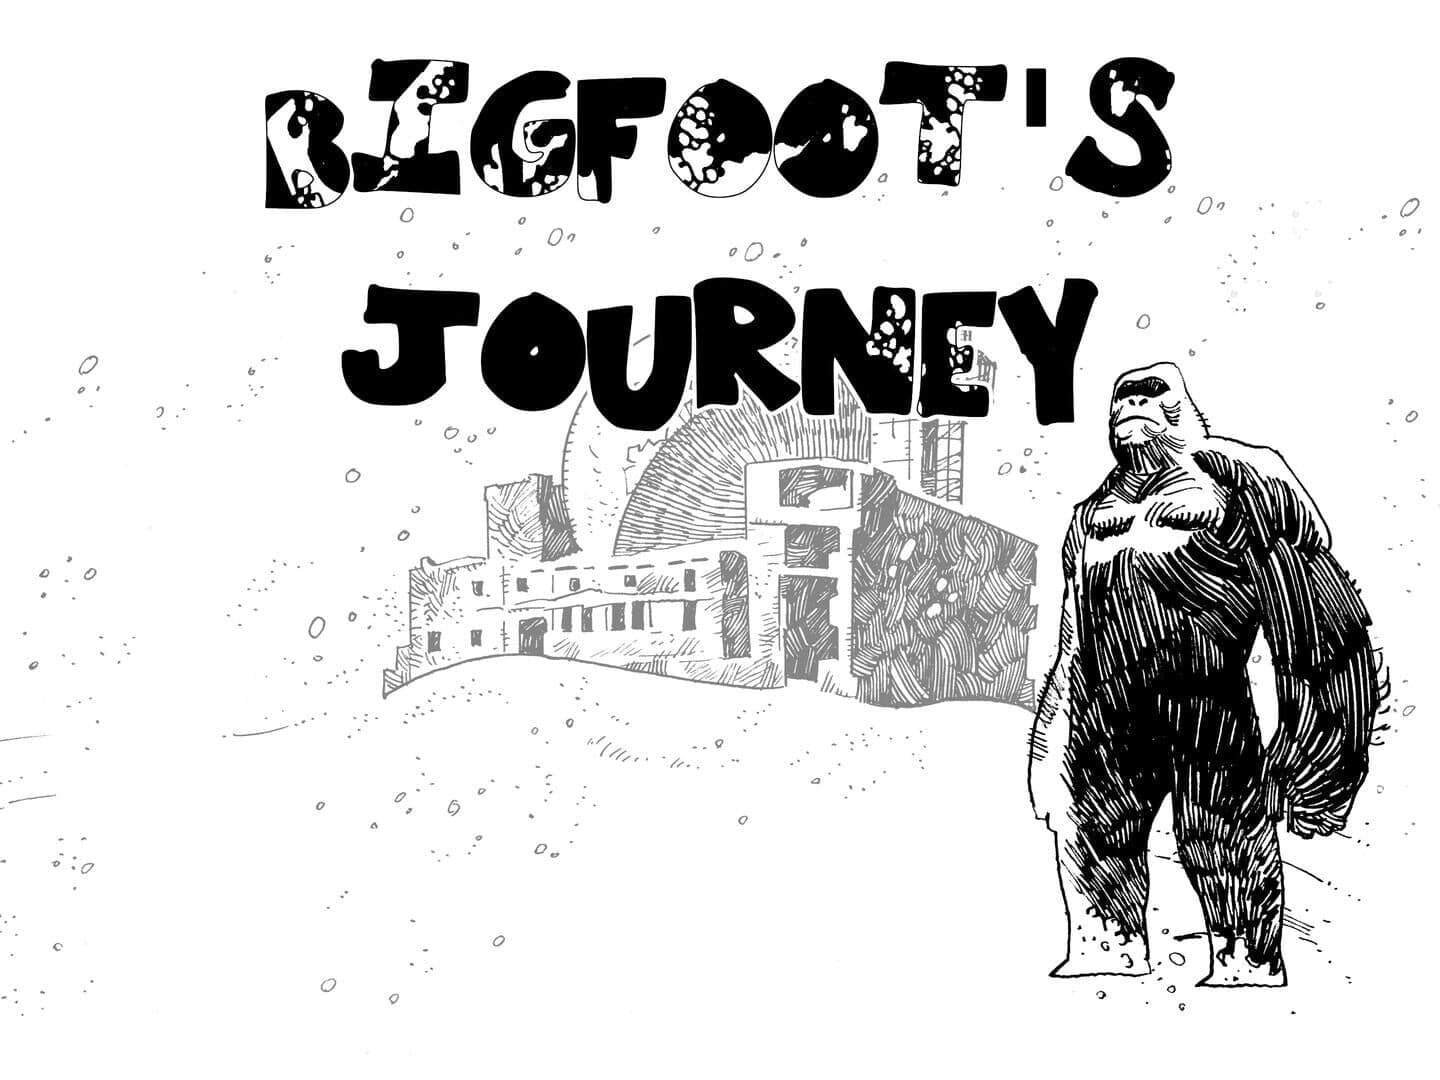 Bigfoot's Journey Image